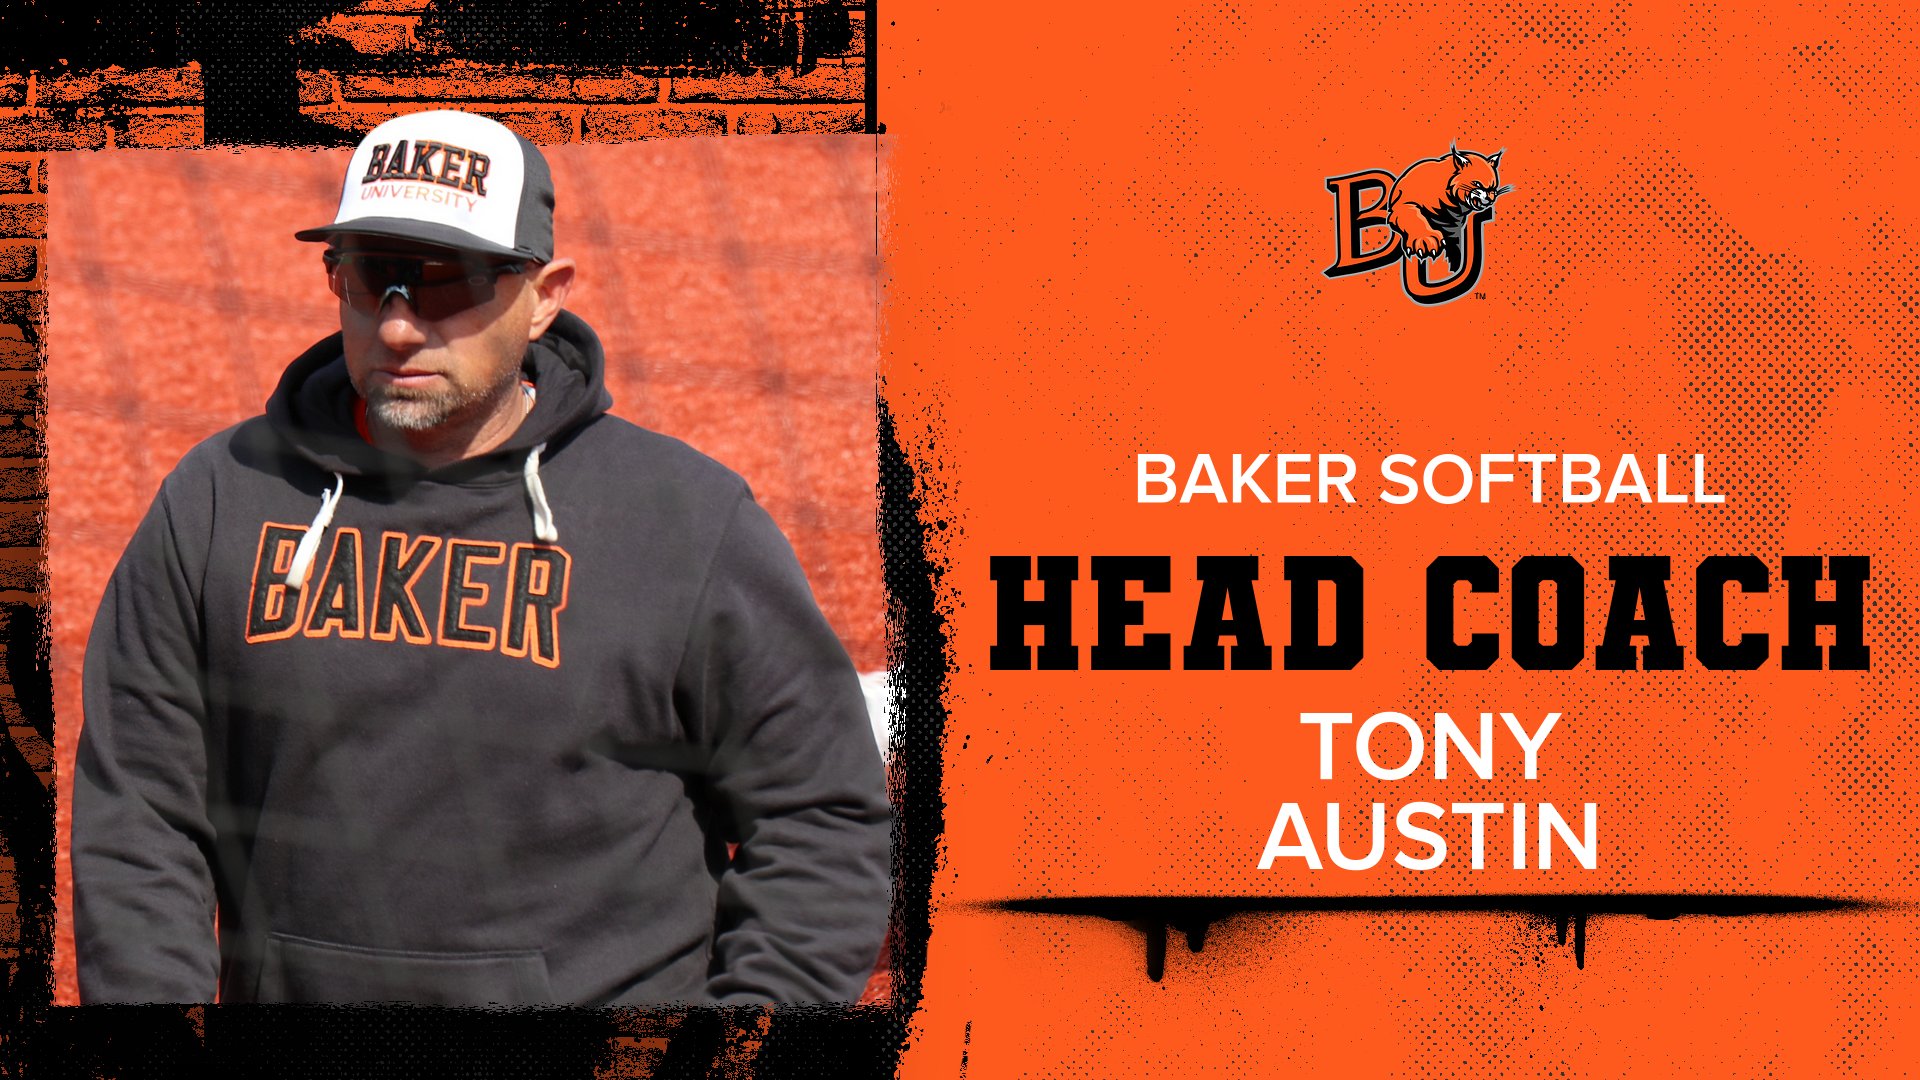 Austin Promoted to Head Coach of Baker Softball Program